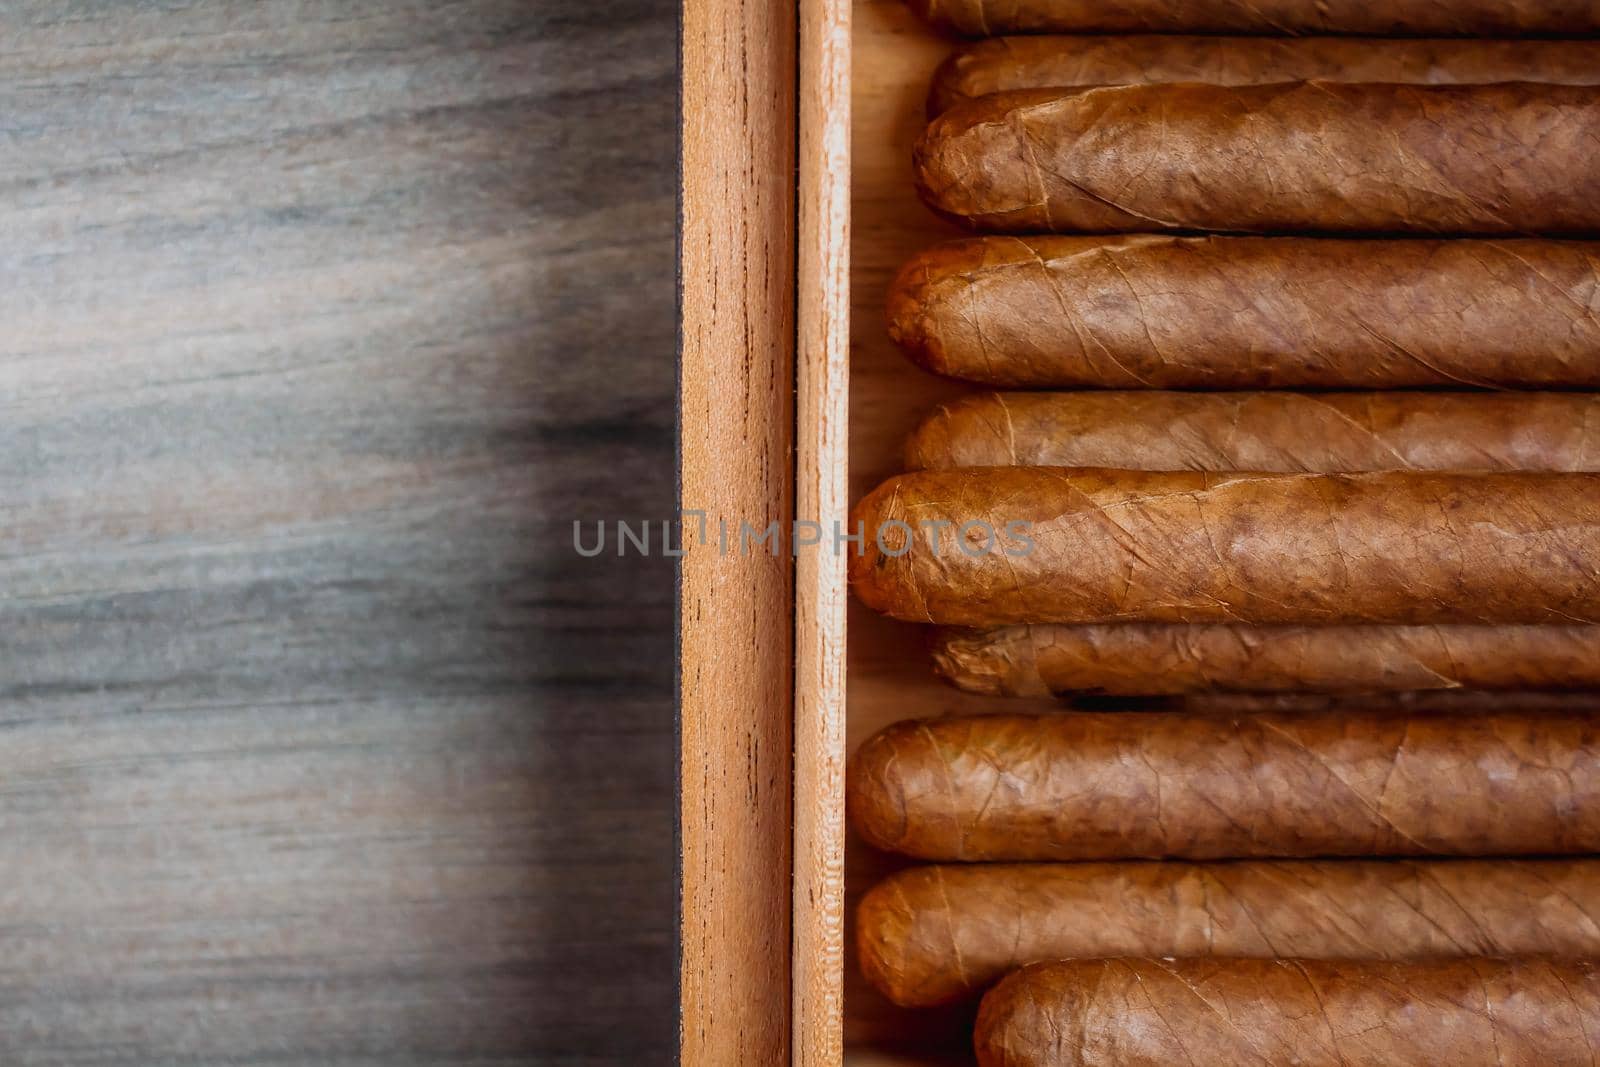 Cigars in humidor by JuliaDorian